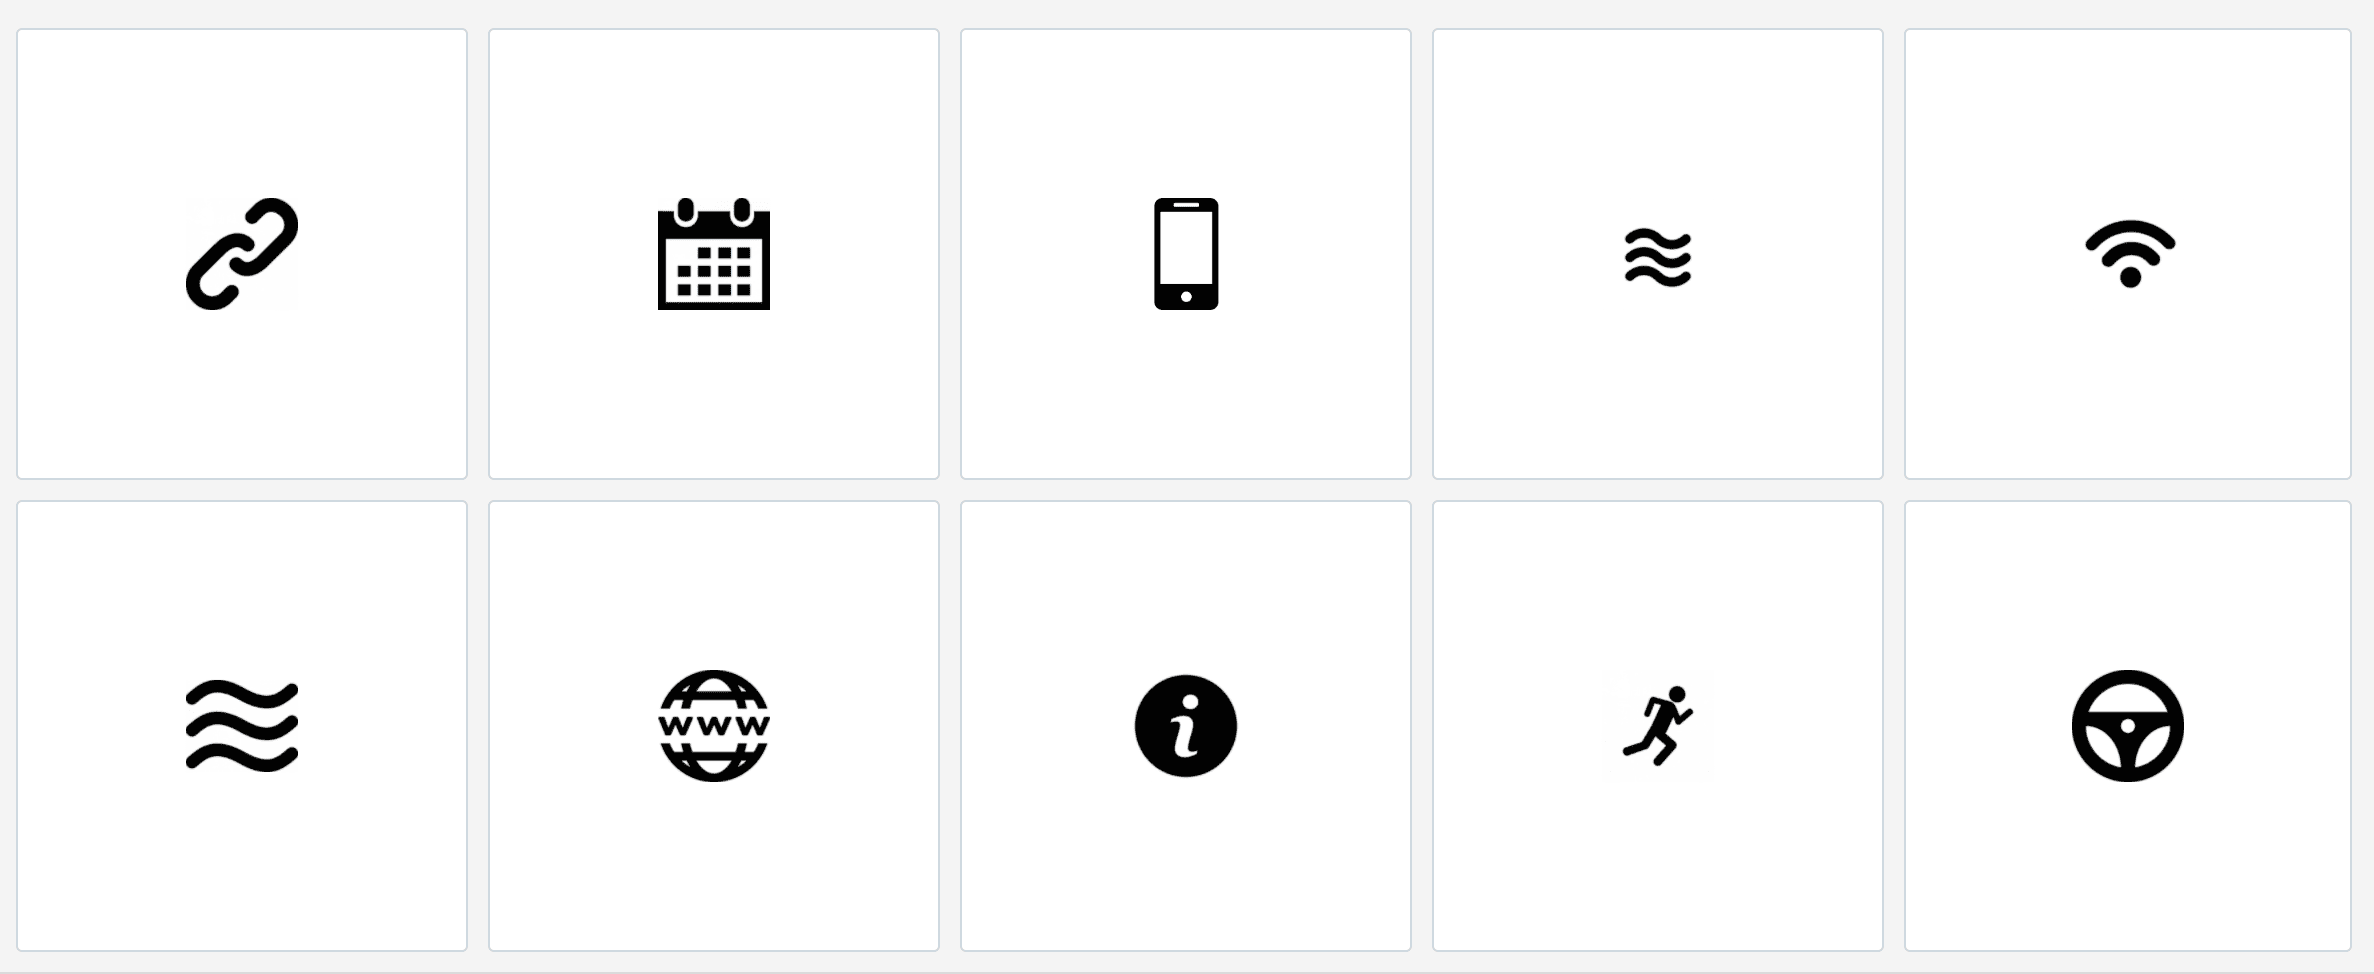 Icons from Freepik.